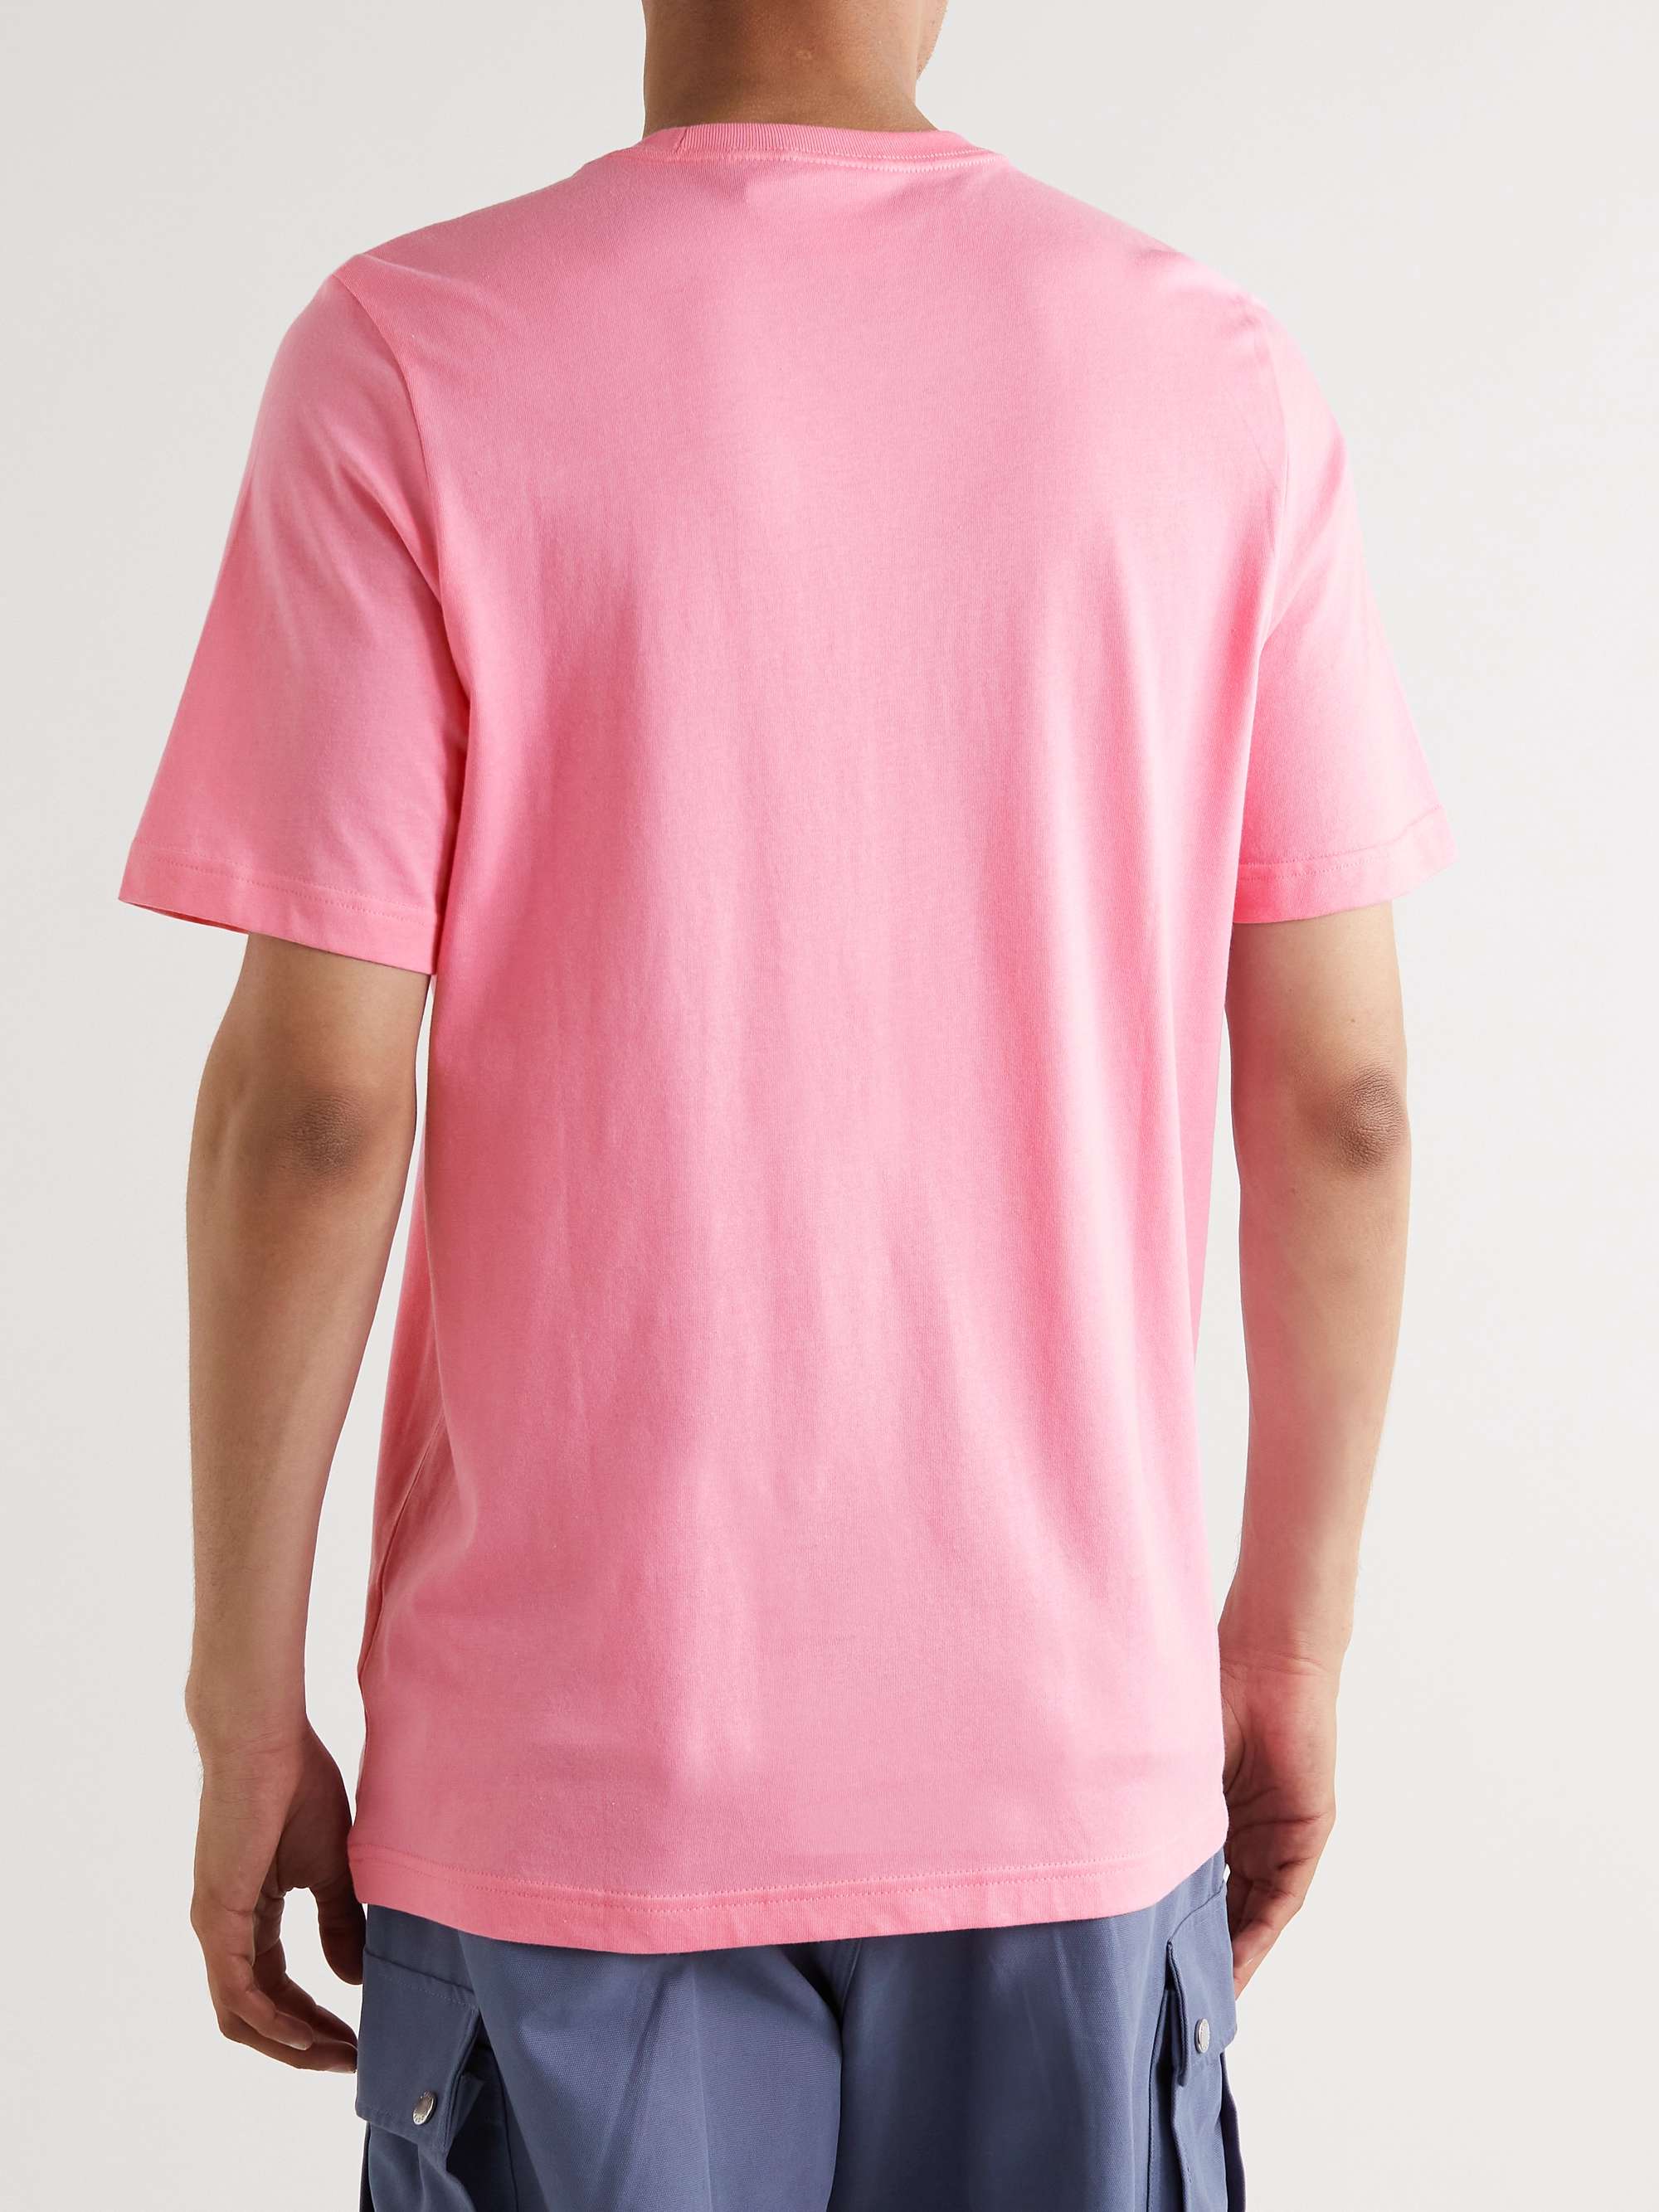 ADIDAS ORIGINALS Adicolor Essentials Logo-Embroidered Cotton-Jersey T-Shirt